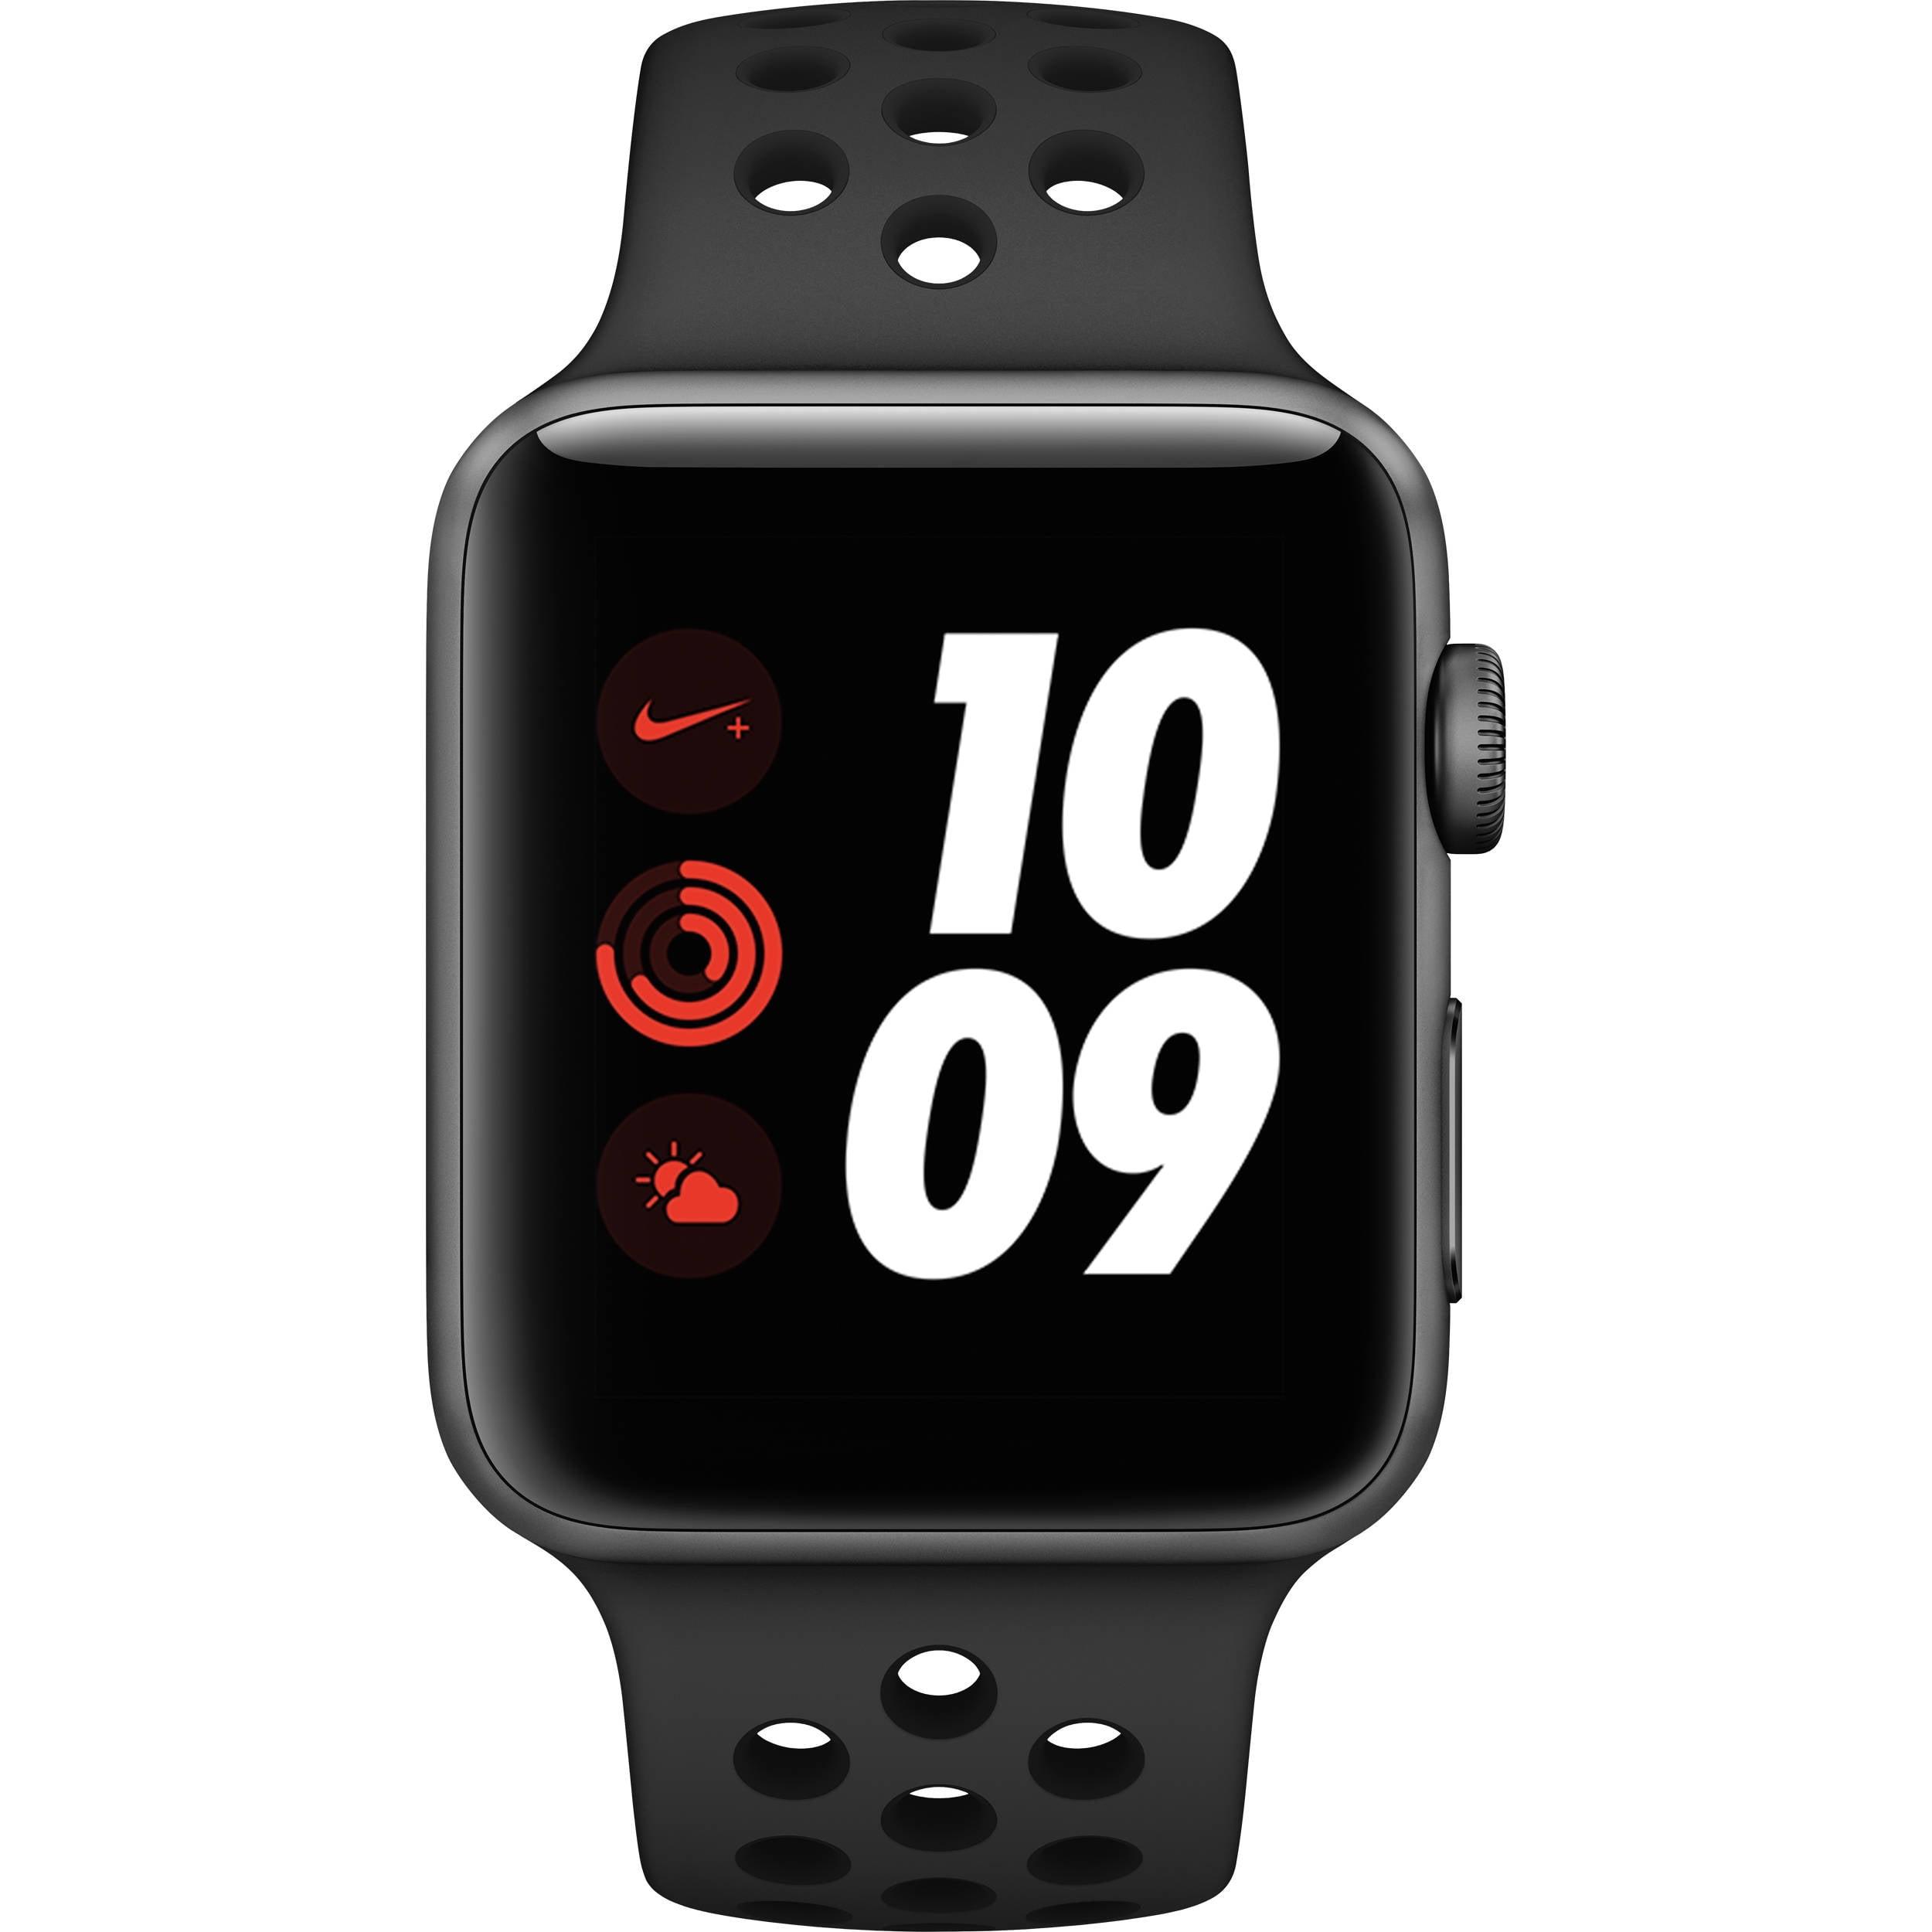 Apple Watch Nike+ Series 3 (Space Gray Aluminum) 42mm - Walmart.com